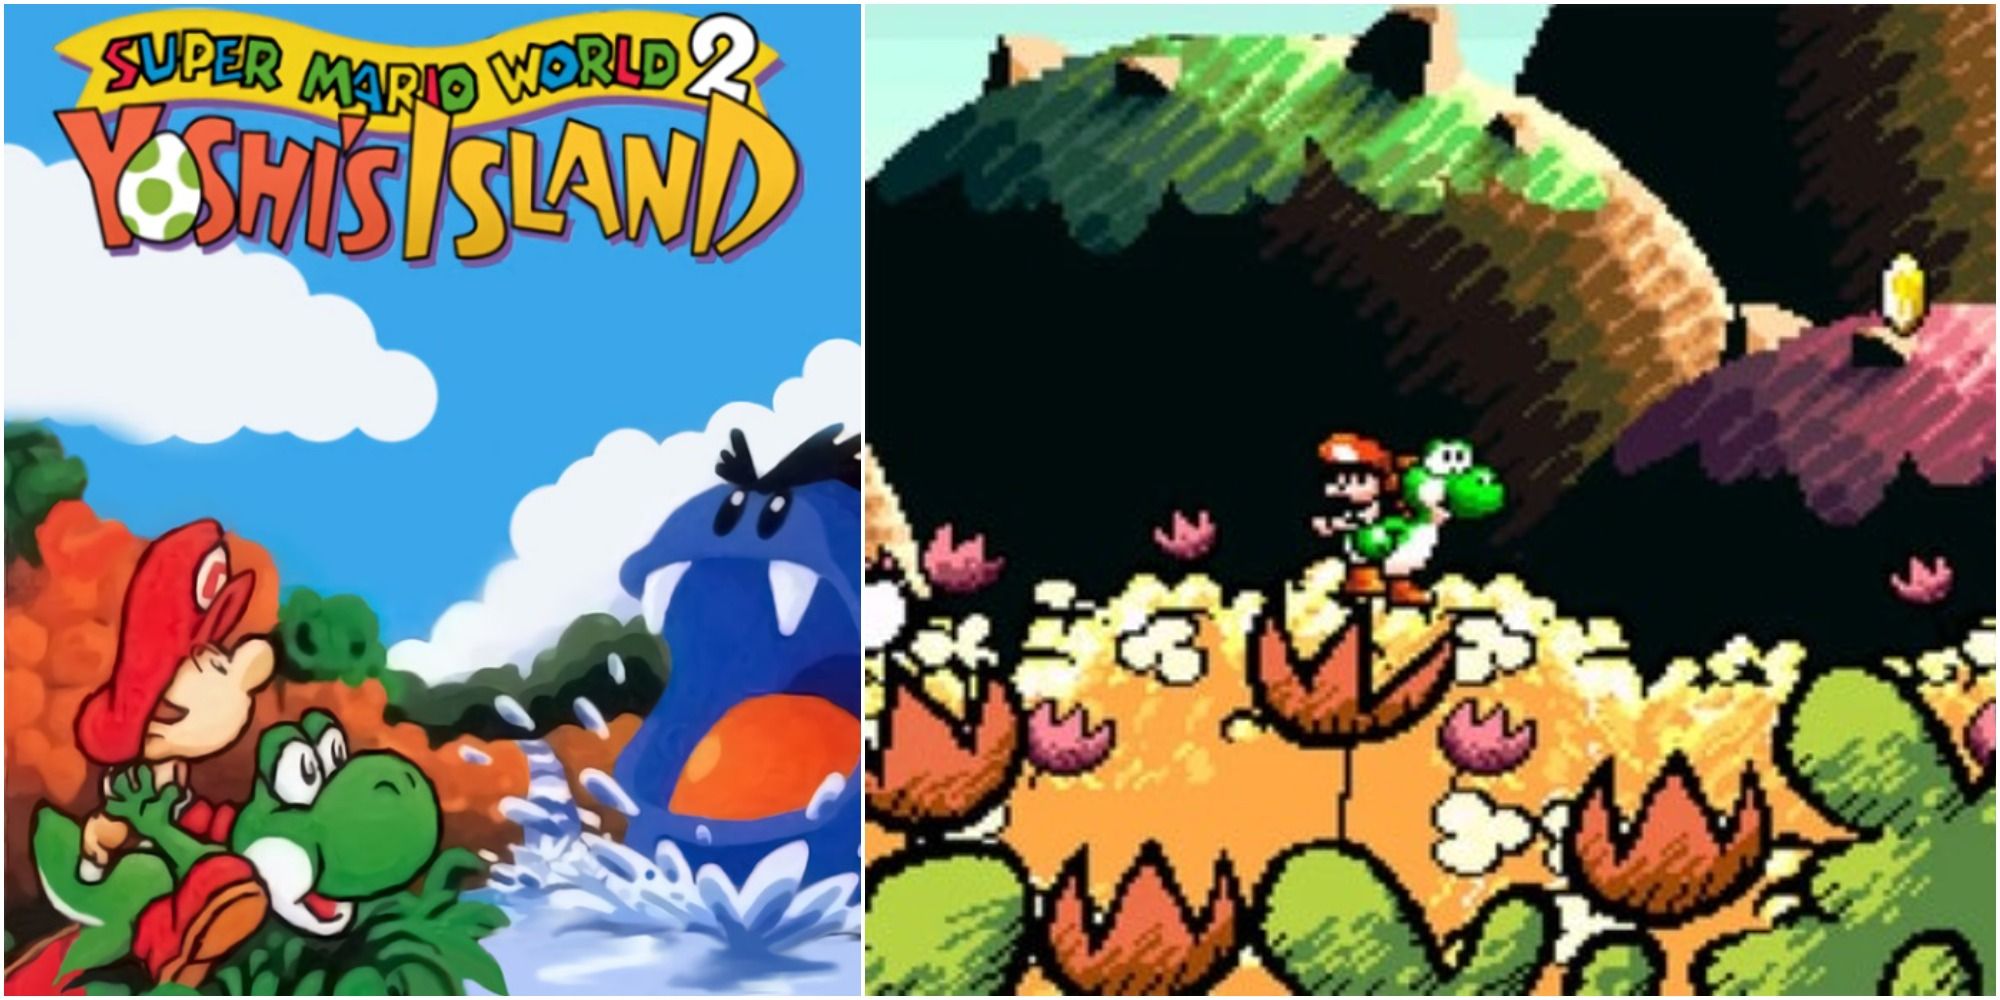 Yoshi's Island Nintendo Switch Online box art and gameplay